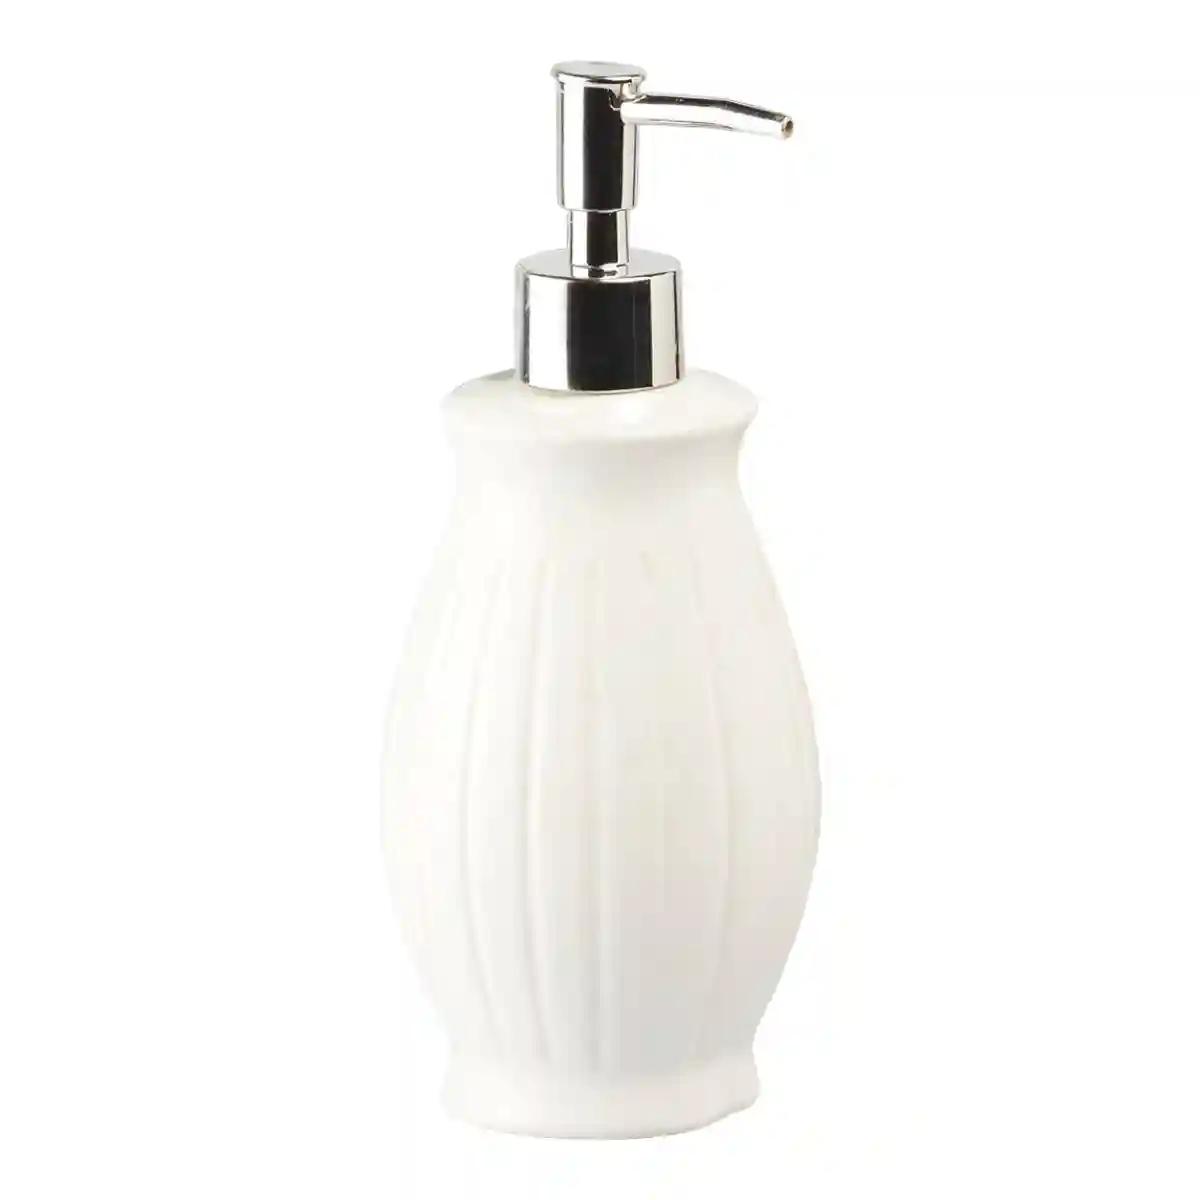 Kookee Ceramic Soap Dispenser for Bathroom handwash, refillable pump bottle for Kitchen hand wash basin, Set of 2 - White (8004)